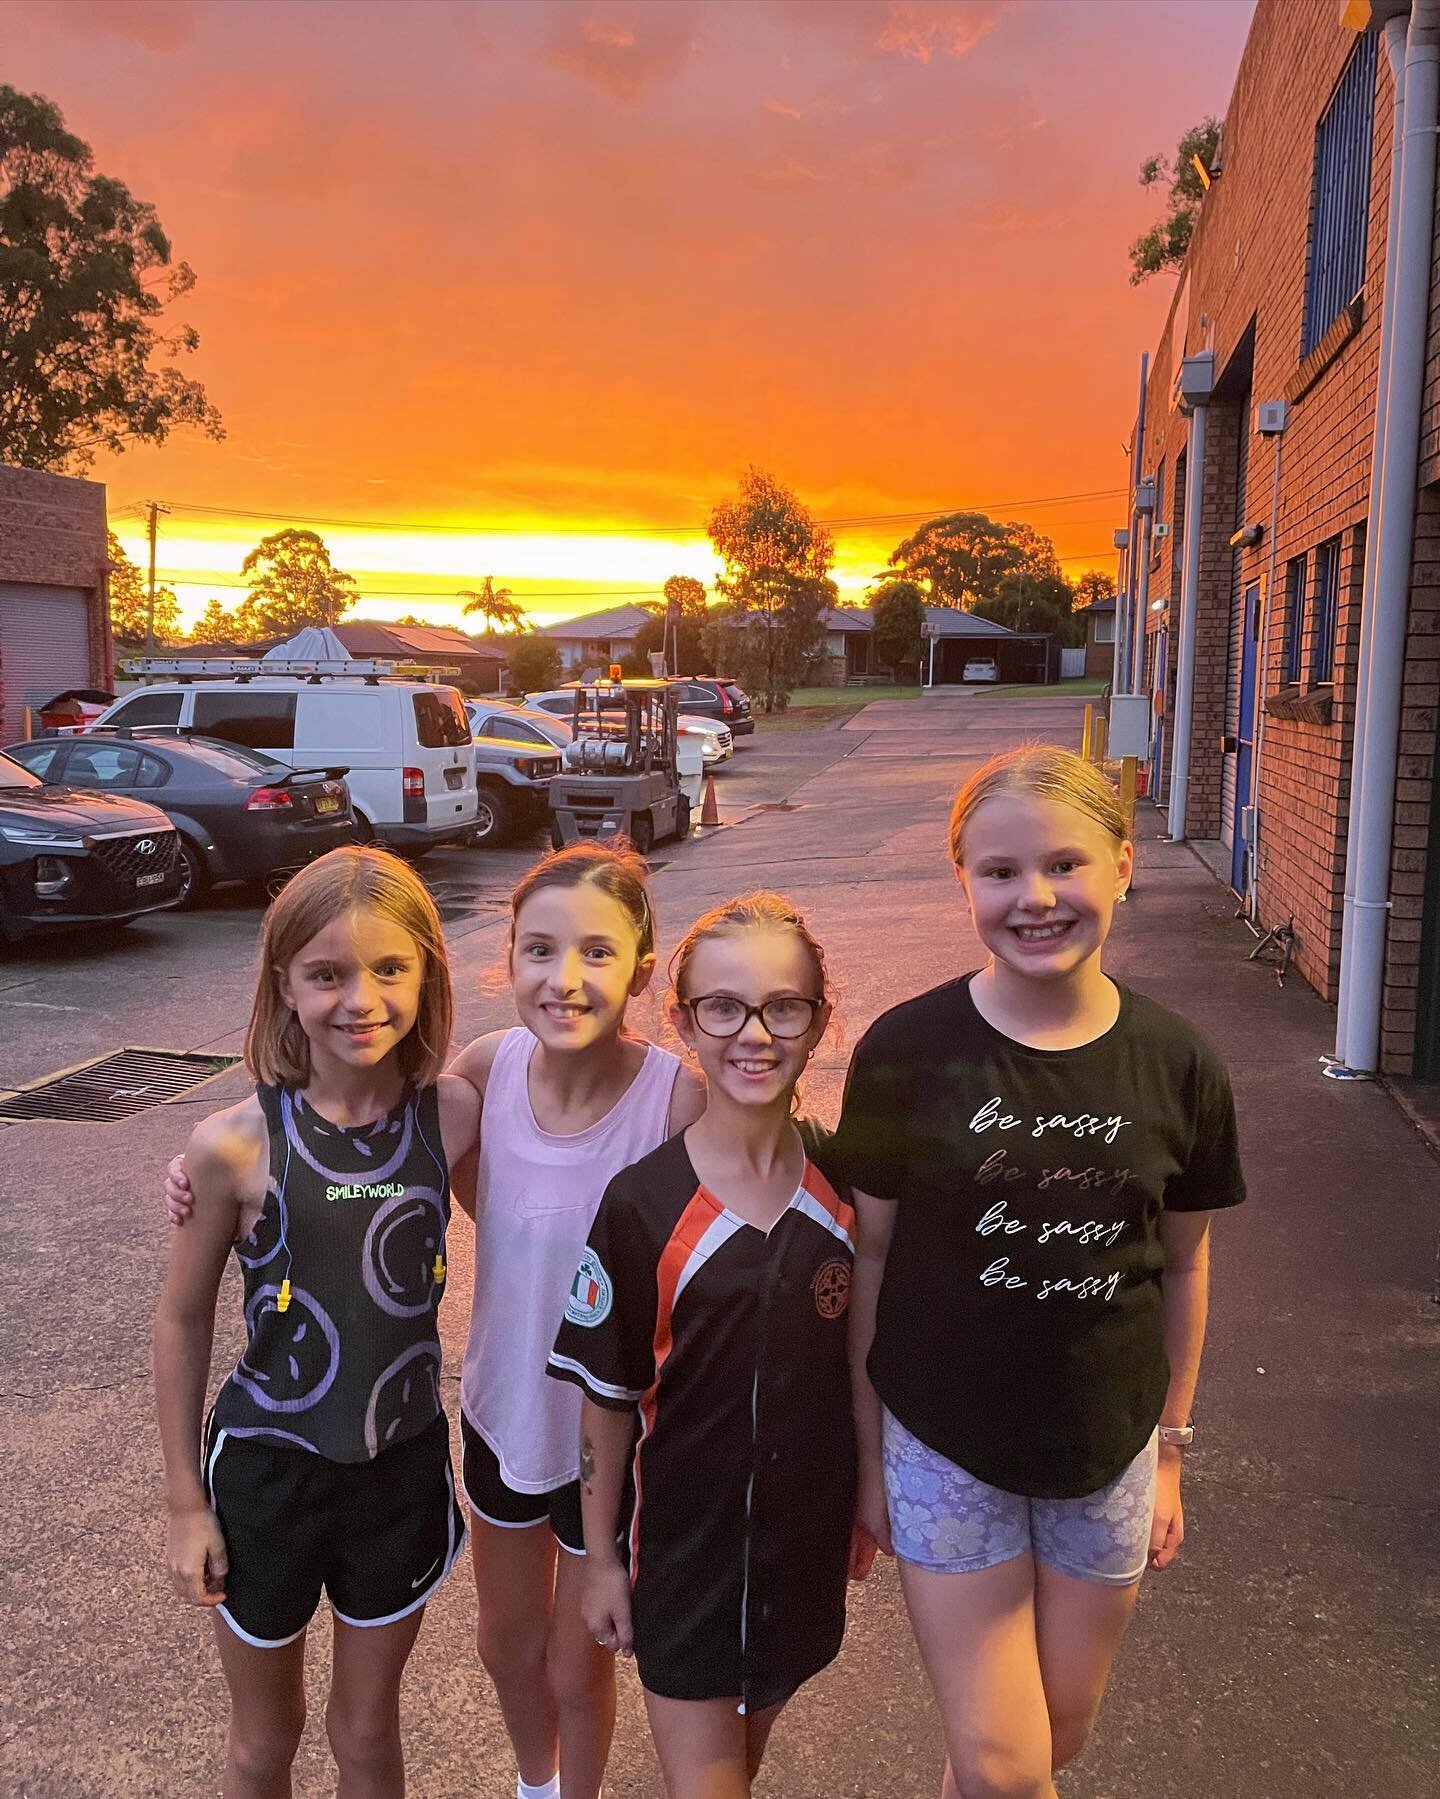 Sunsets + best friends 🌅👯&zwj;♀️🧡

#irishdance #irishdancing #sunset #sydneysunset